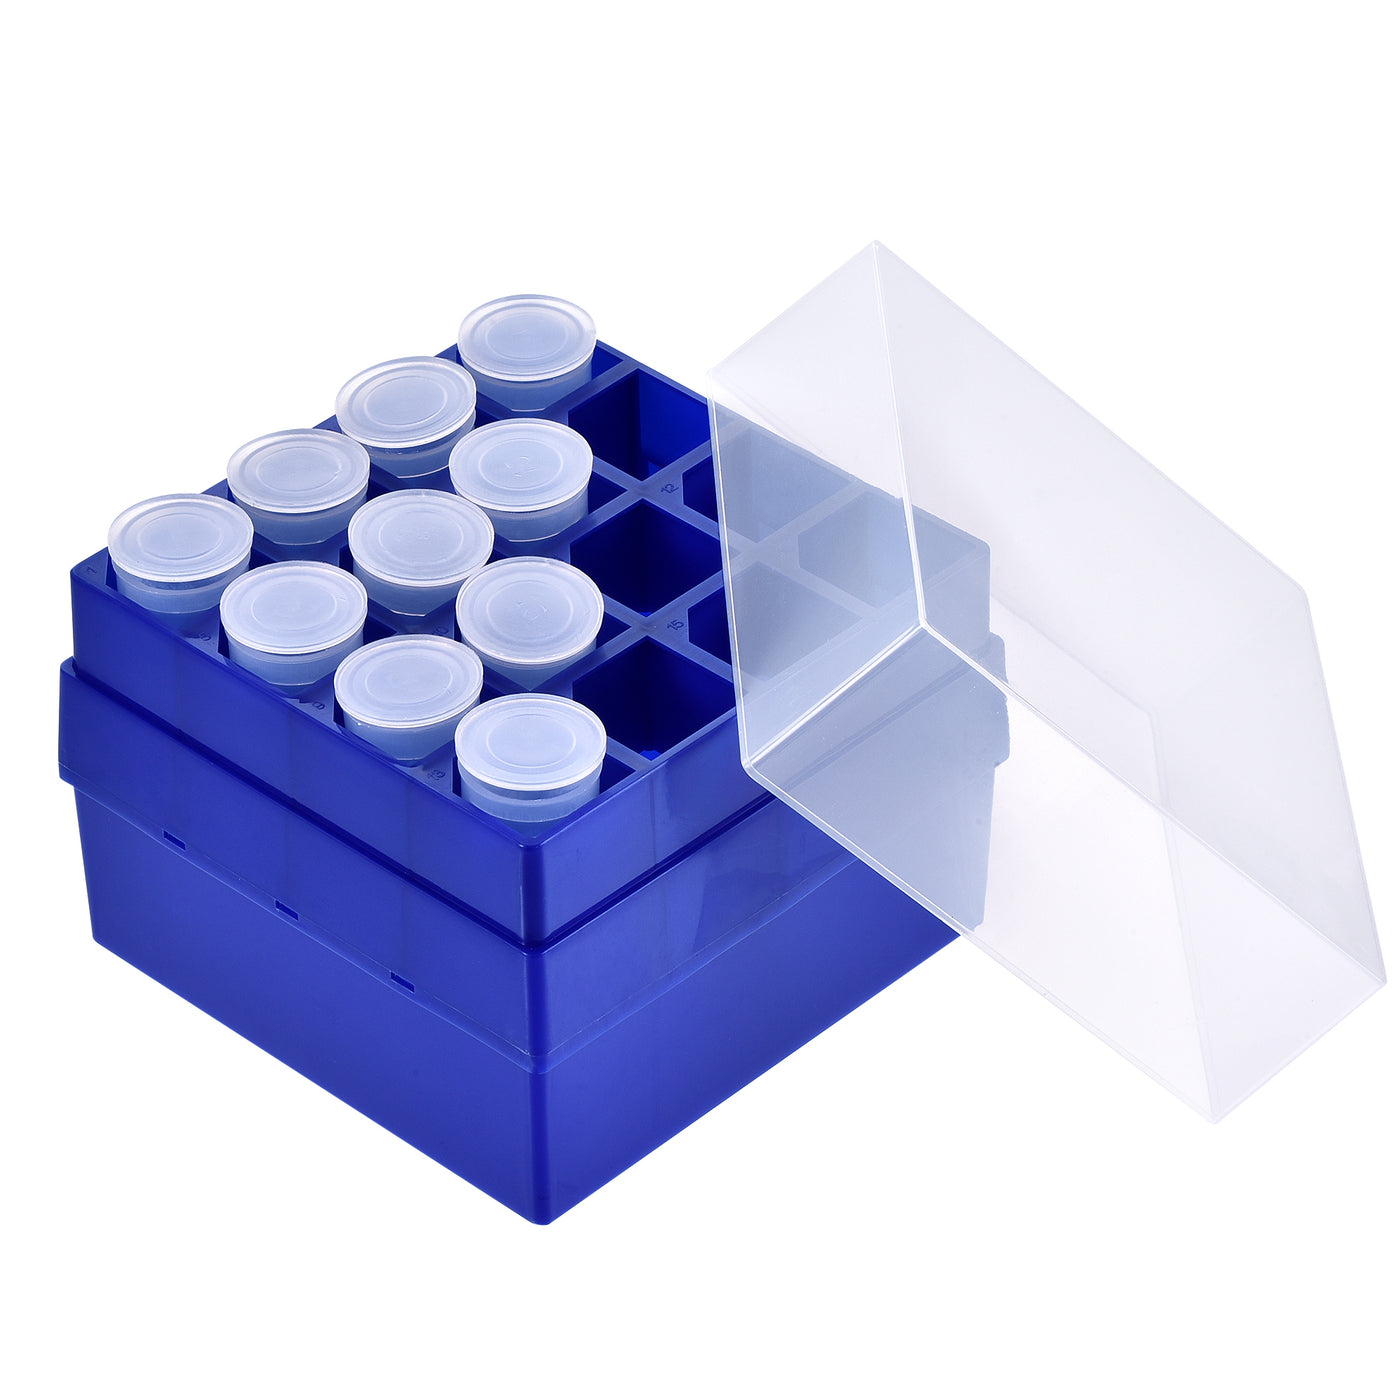 uxcell Uxcell Centrifuge Tube Freezer Storage Box 16-Well PP Holder Dark Blue for 50ml Tubes